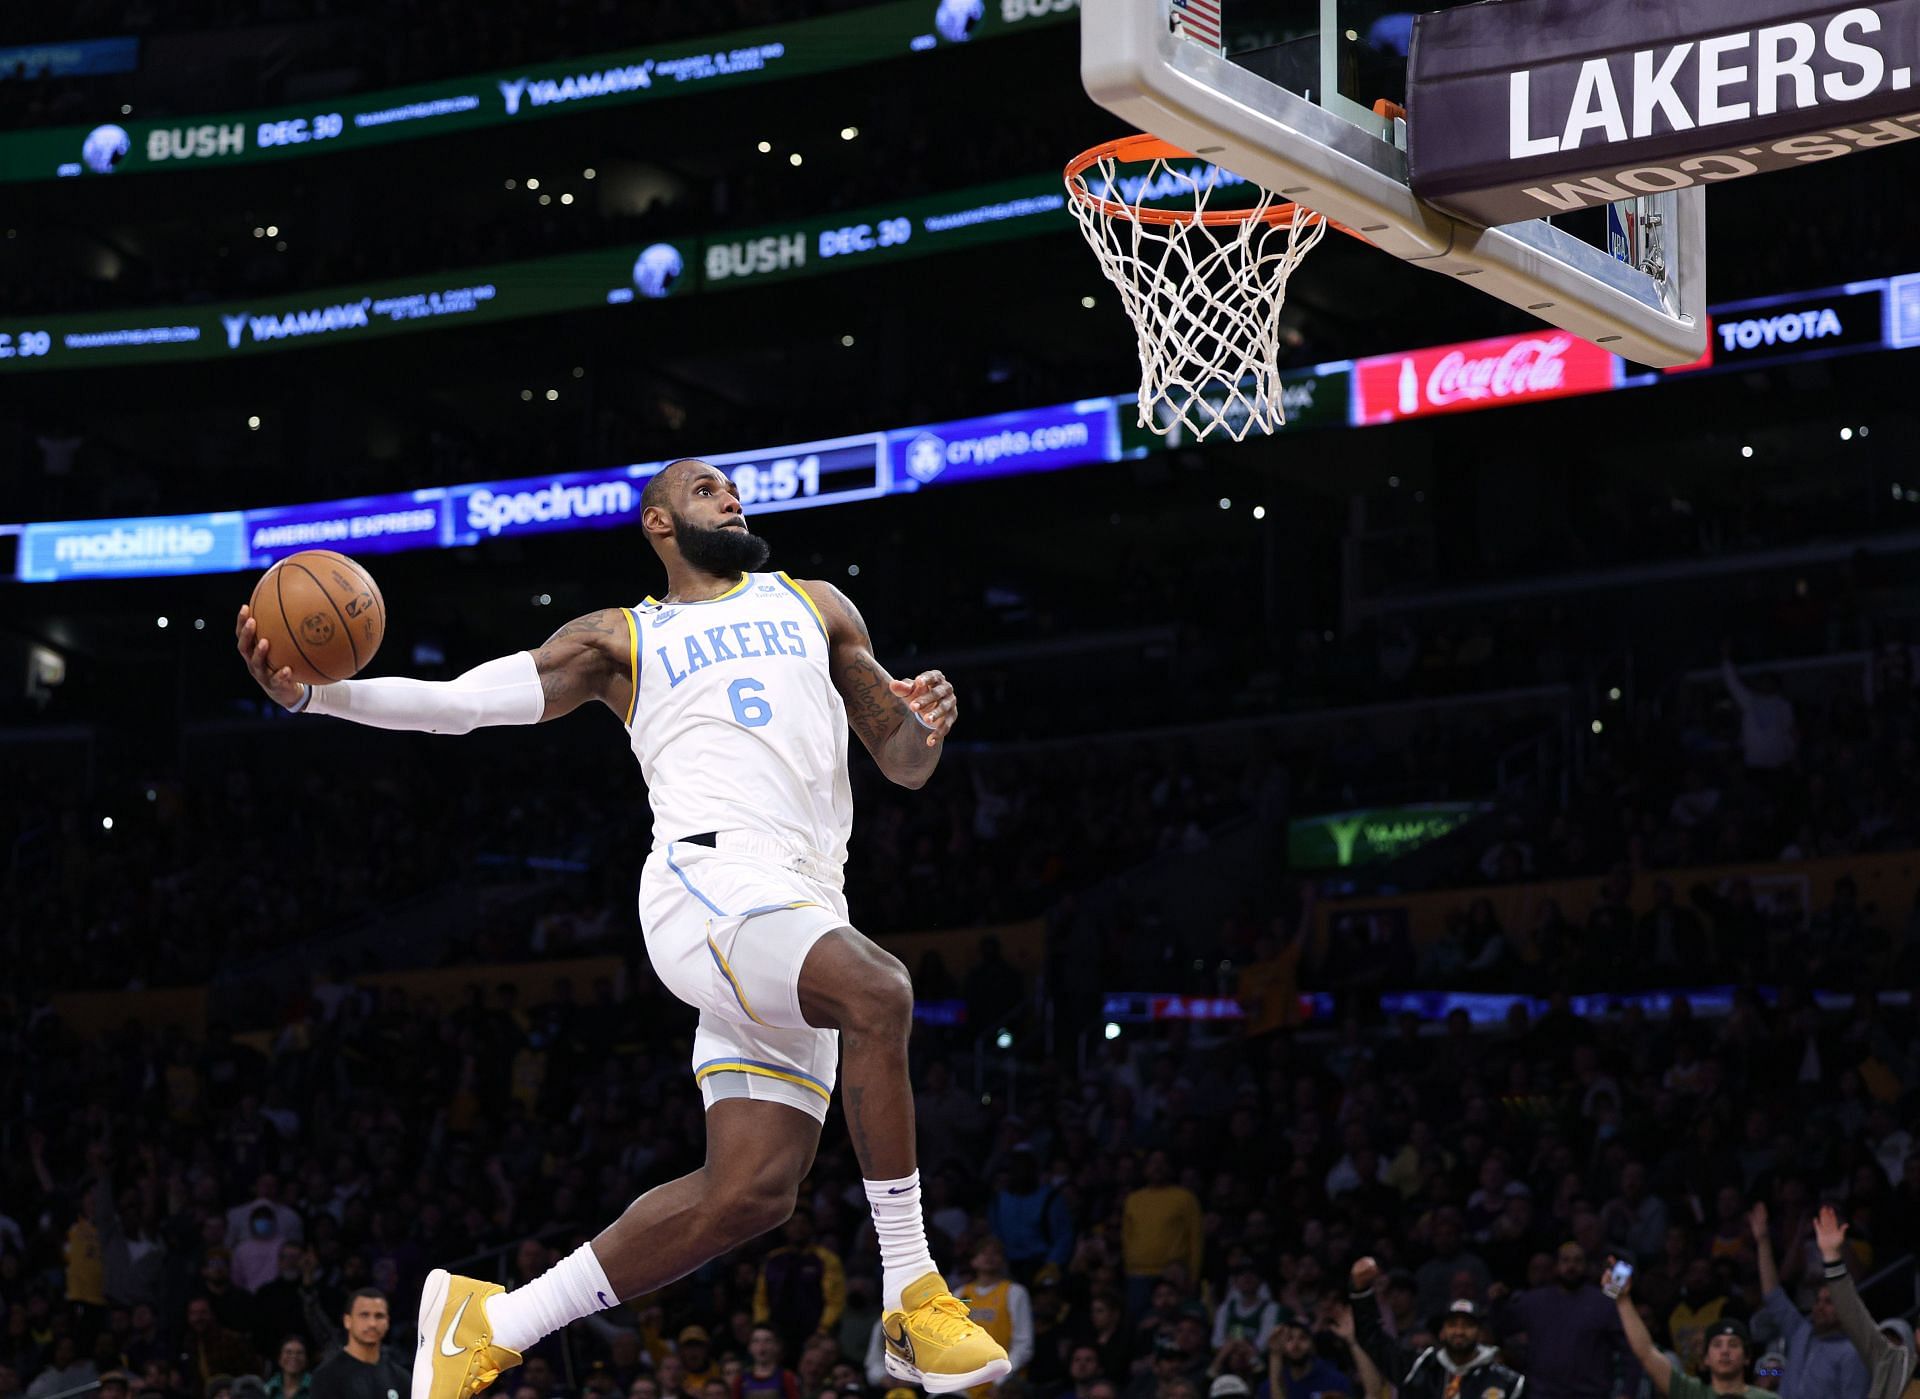 Watch: LeBron James' Drew League dunk goes viral